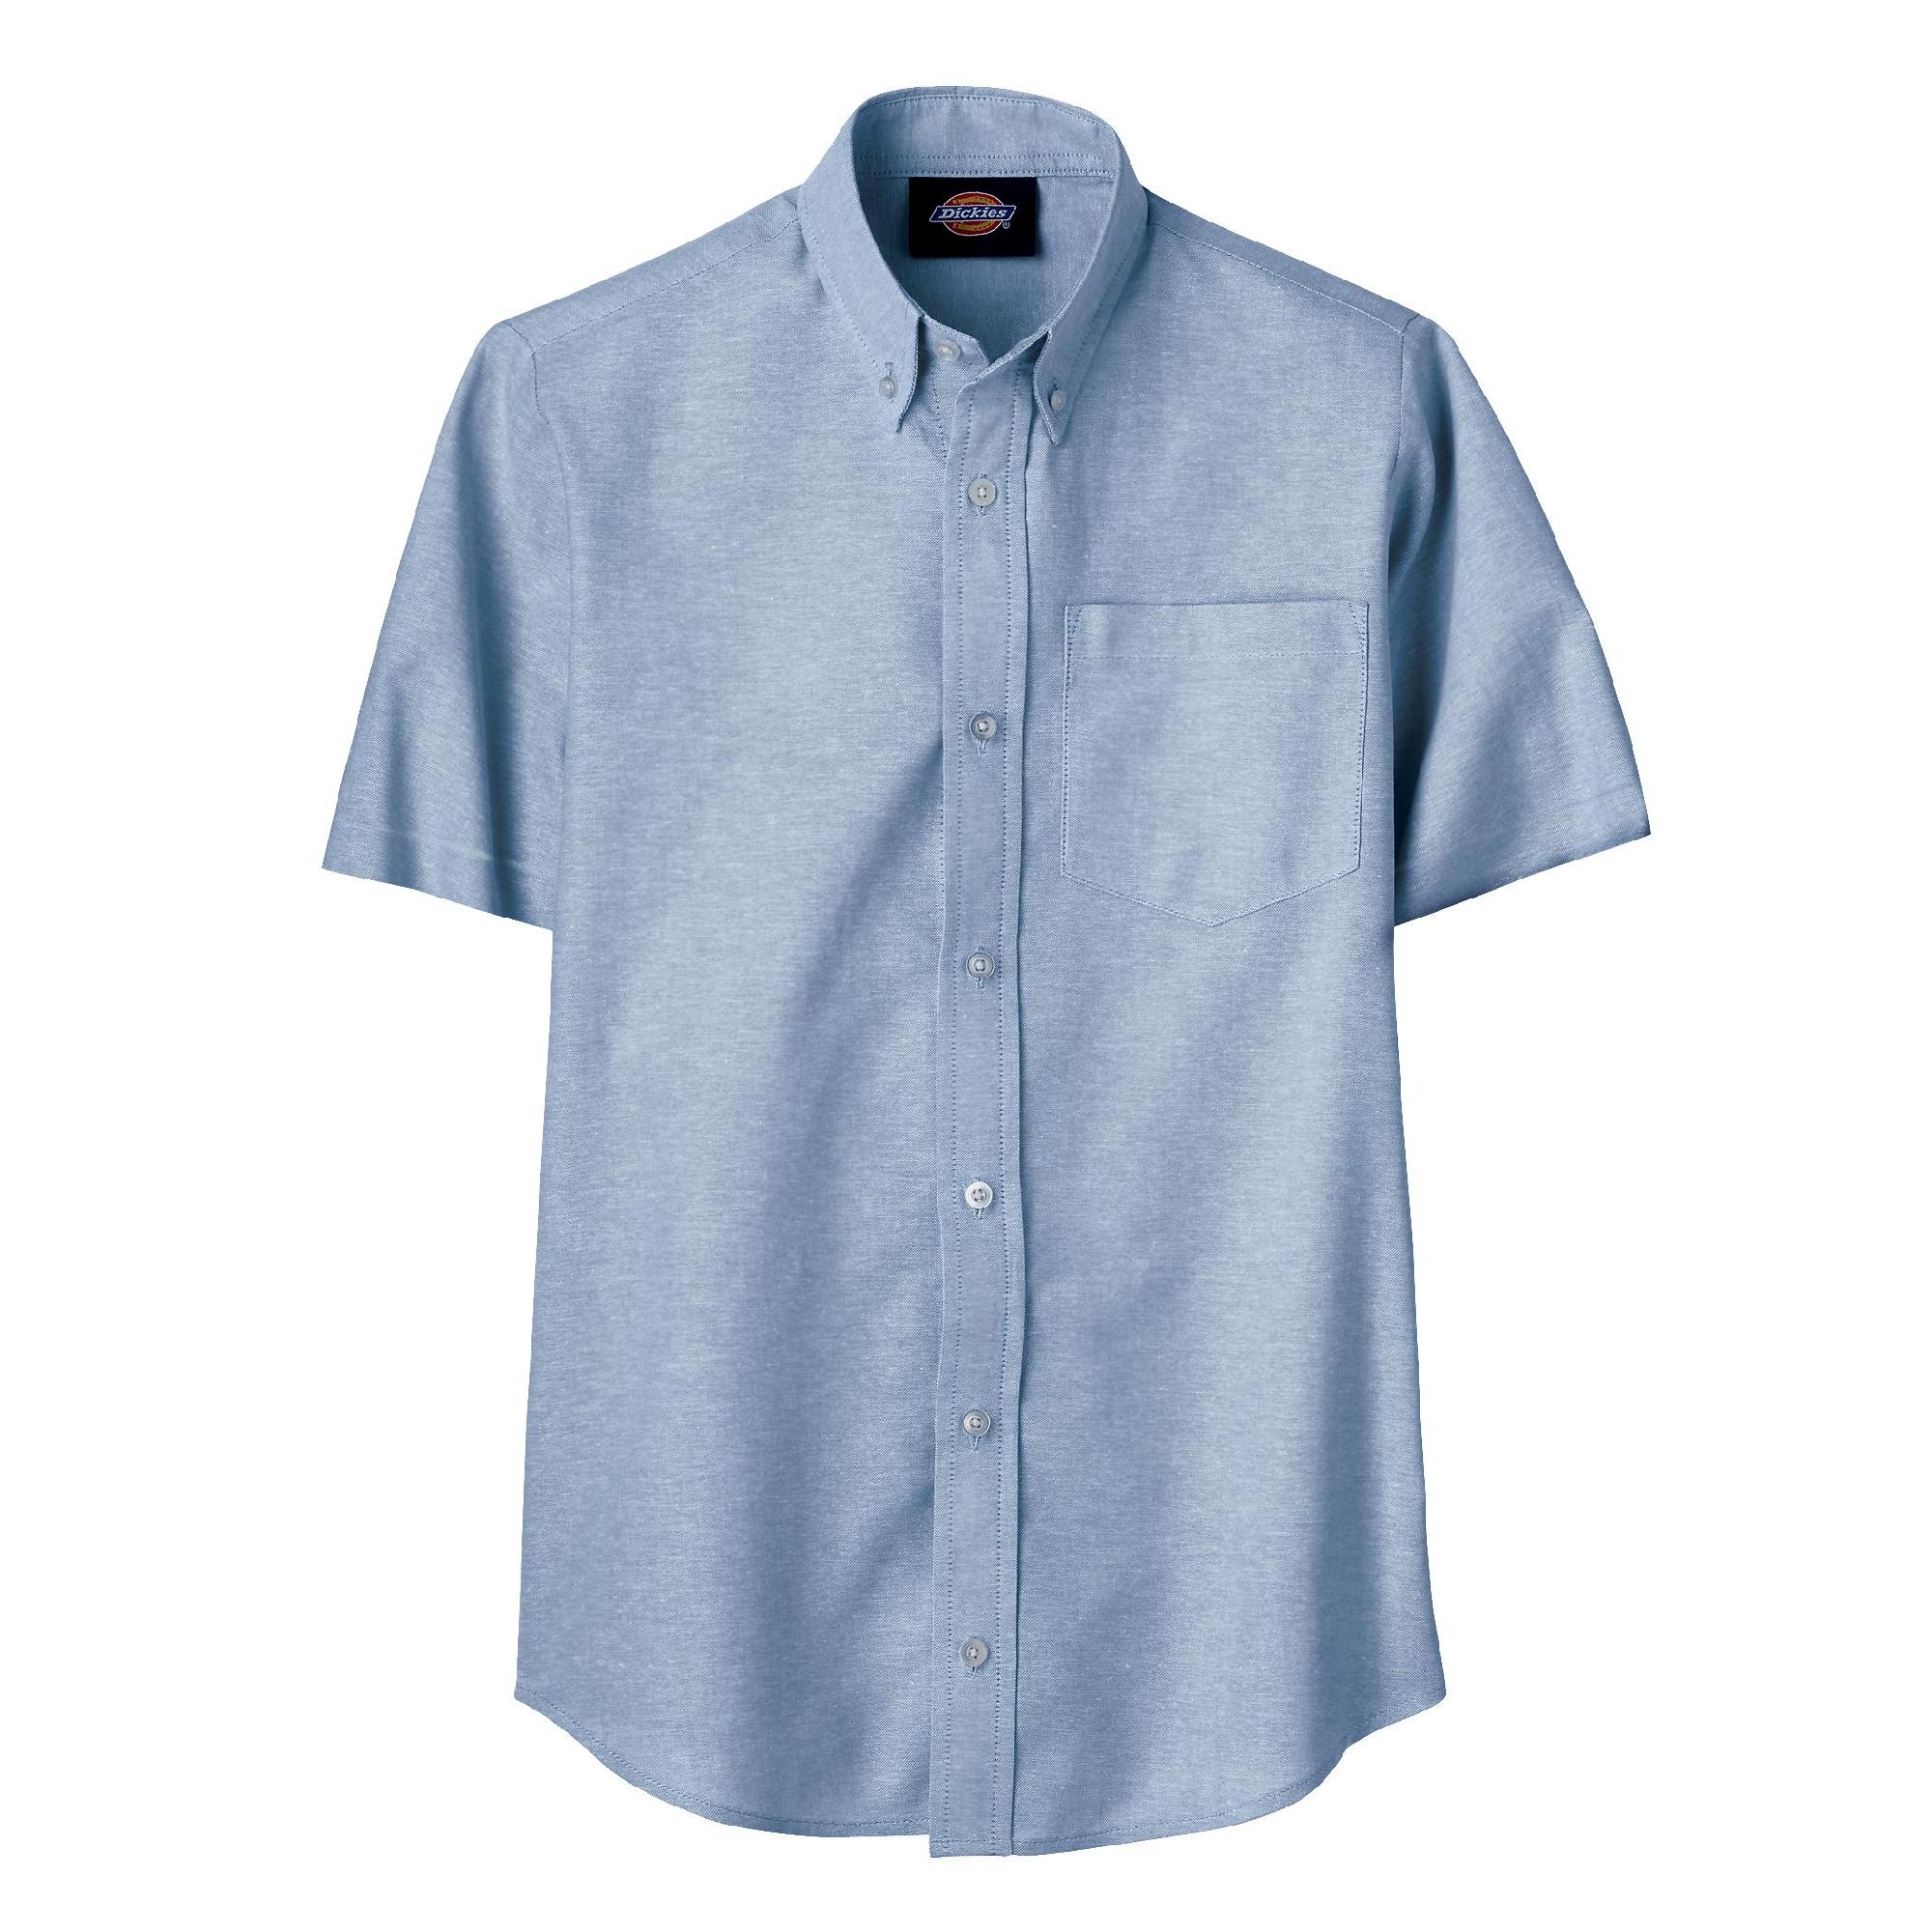 Boys Long Sleeve Oxford Shirt KS920